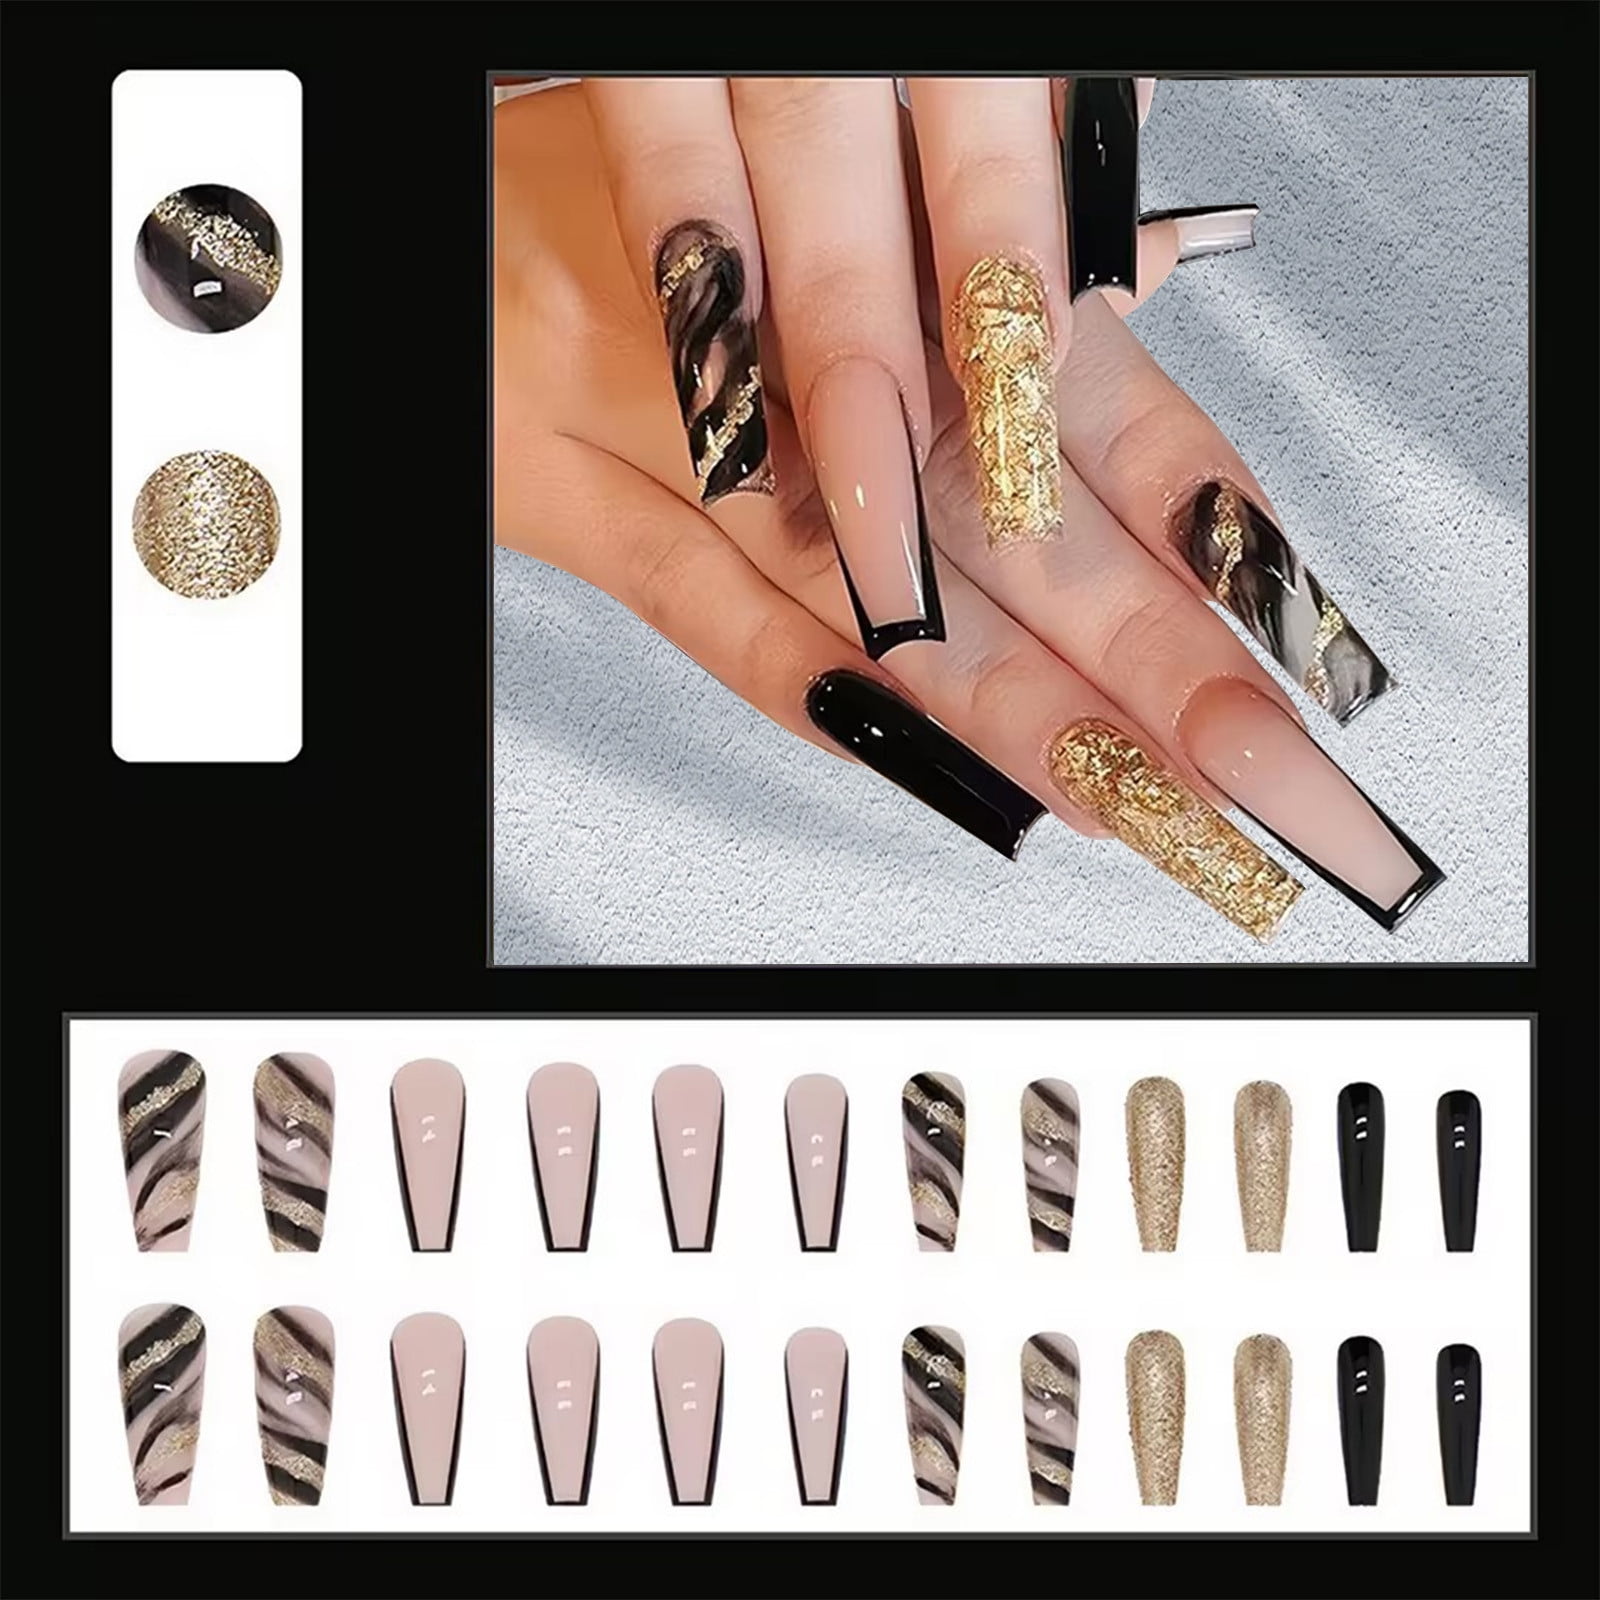 RKZDSR Medium Length Press-on Nails, 24 Tablets Of Fake Nails With ...